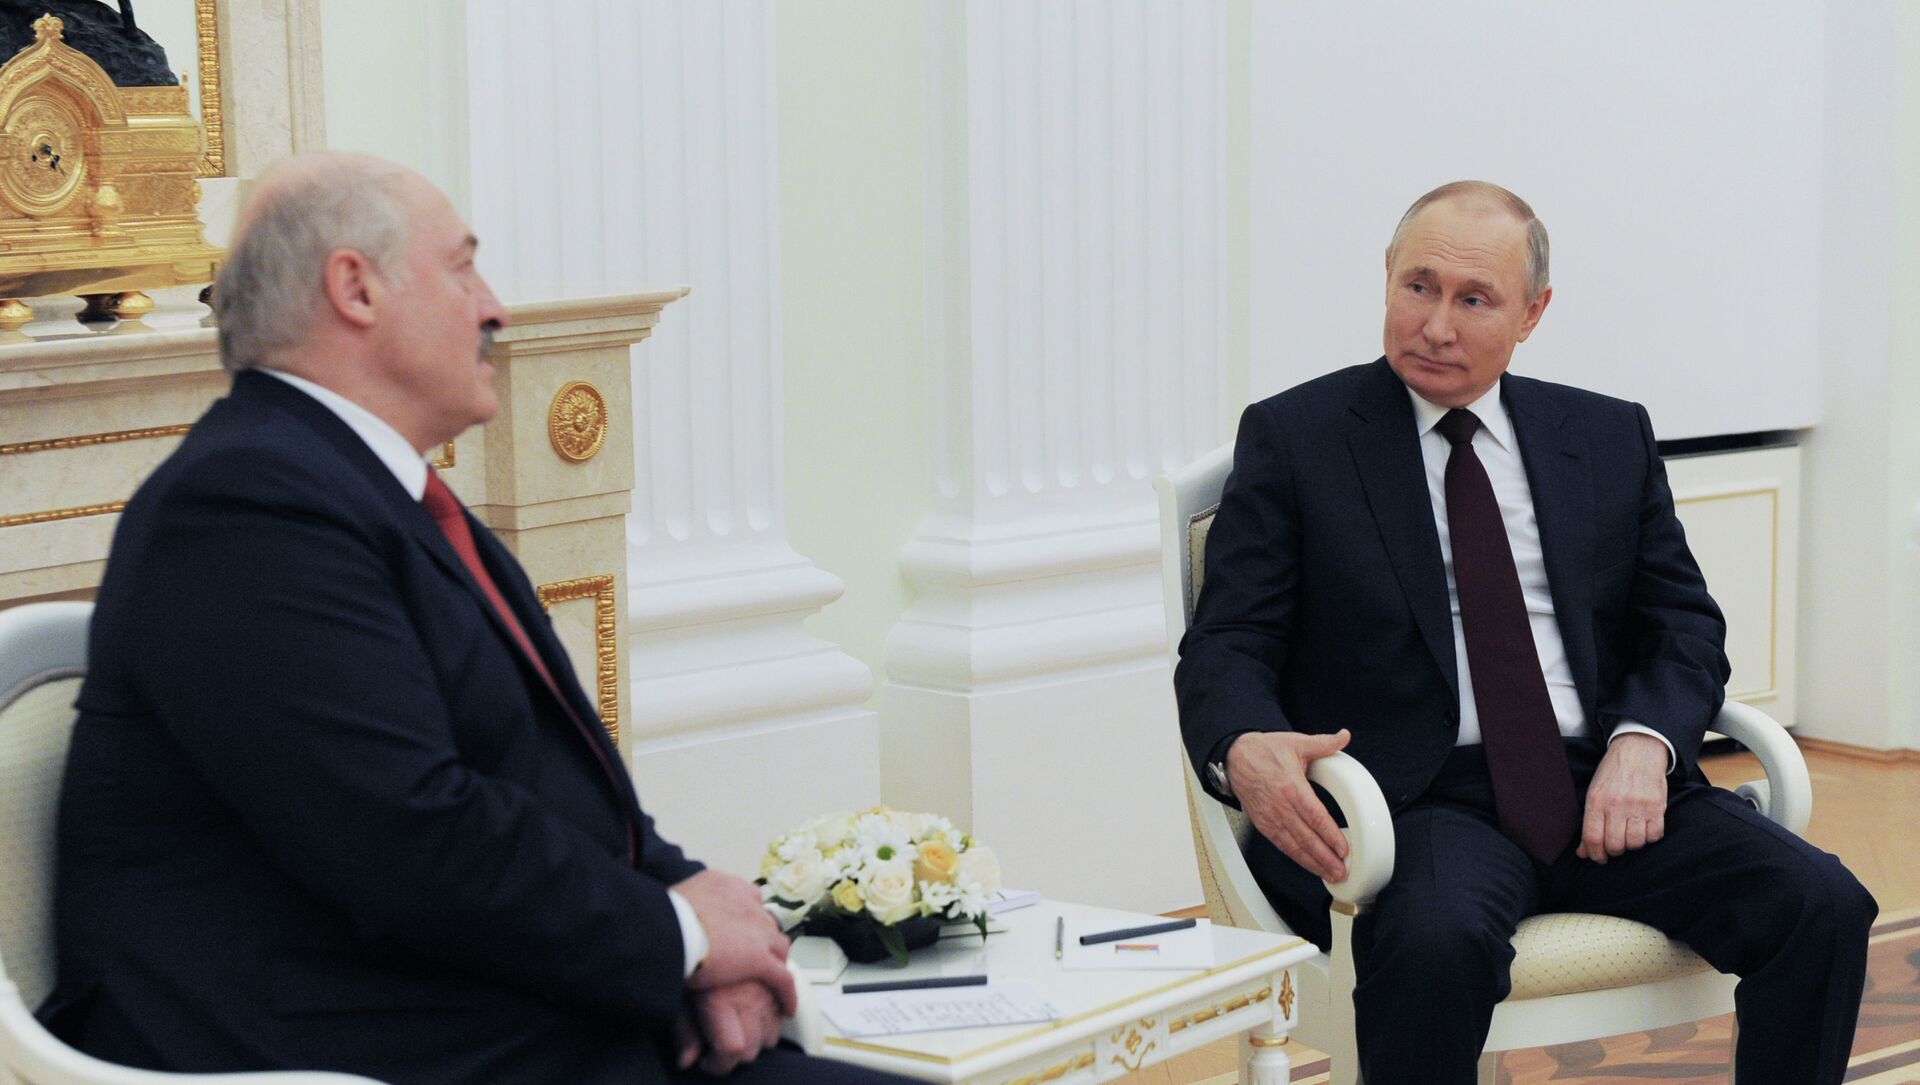 Президент РФ В. Путин встретился с президентом Белоруссии А. Лукашенко - Sputnik Казахстан, 1920, 22.04.2021